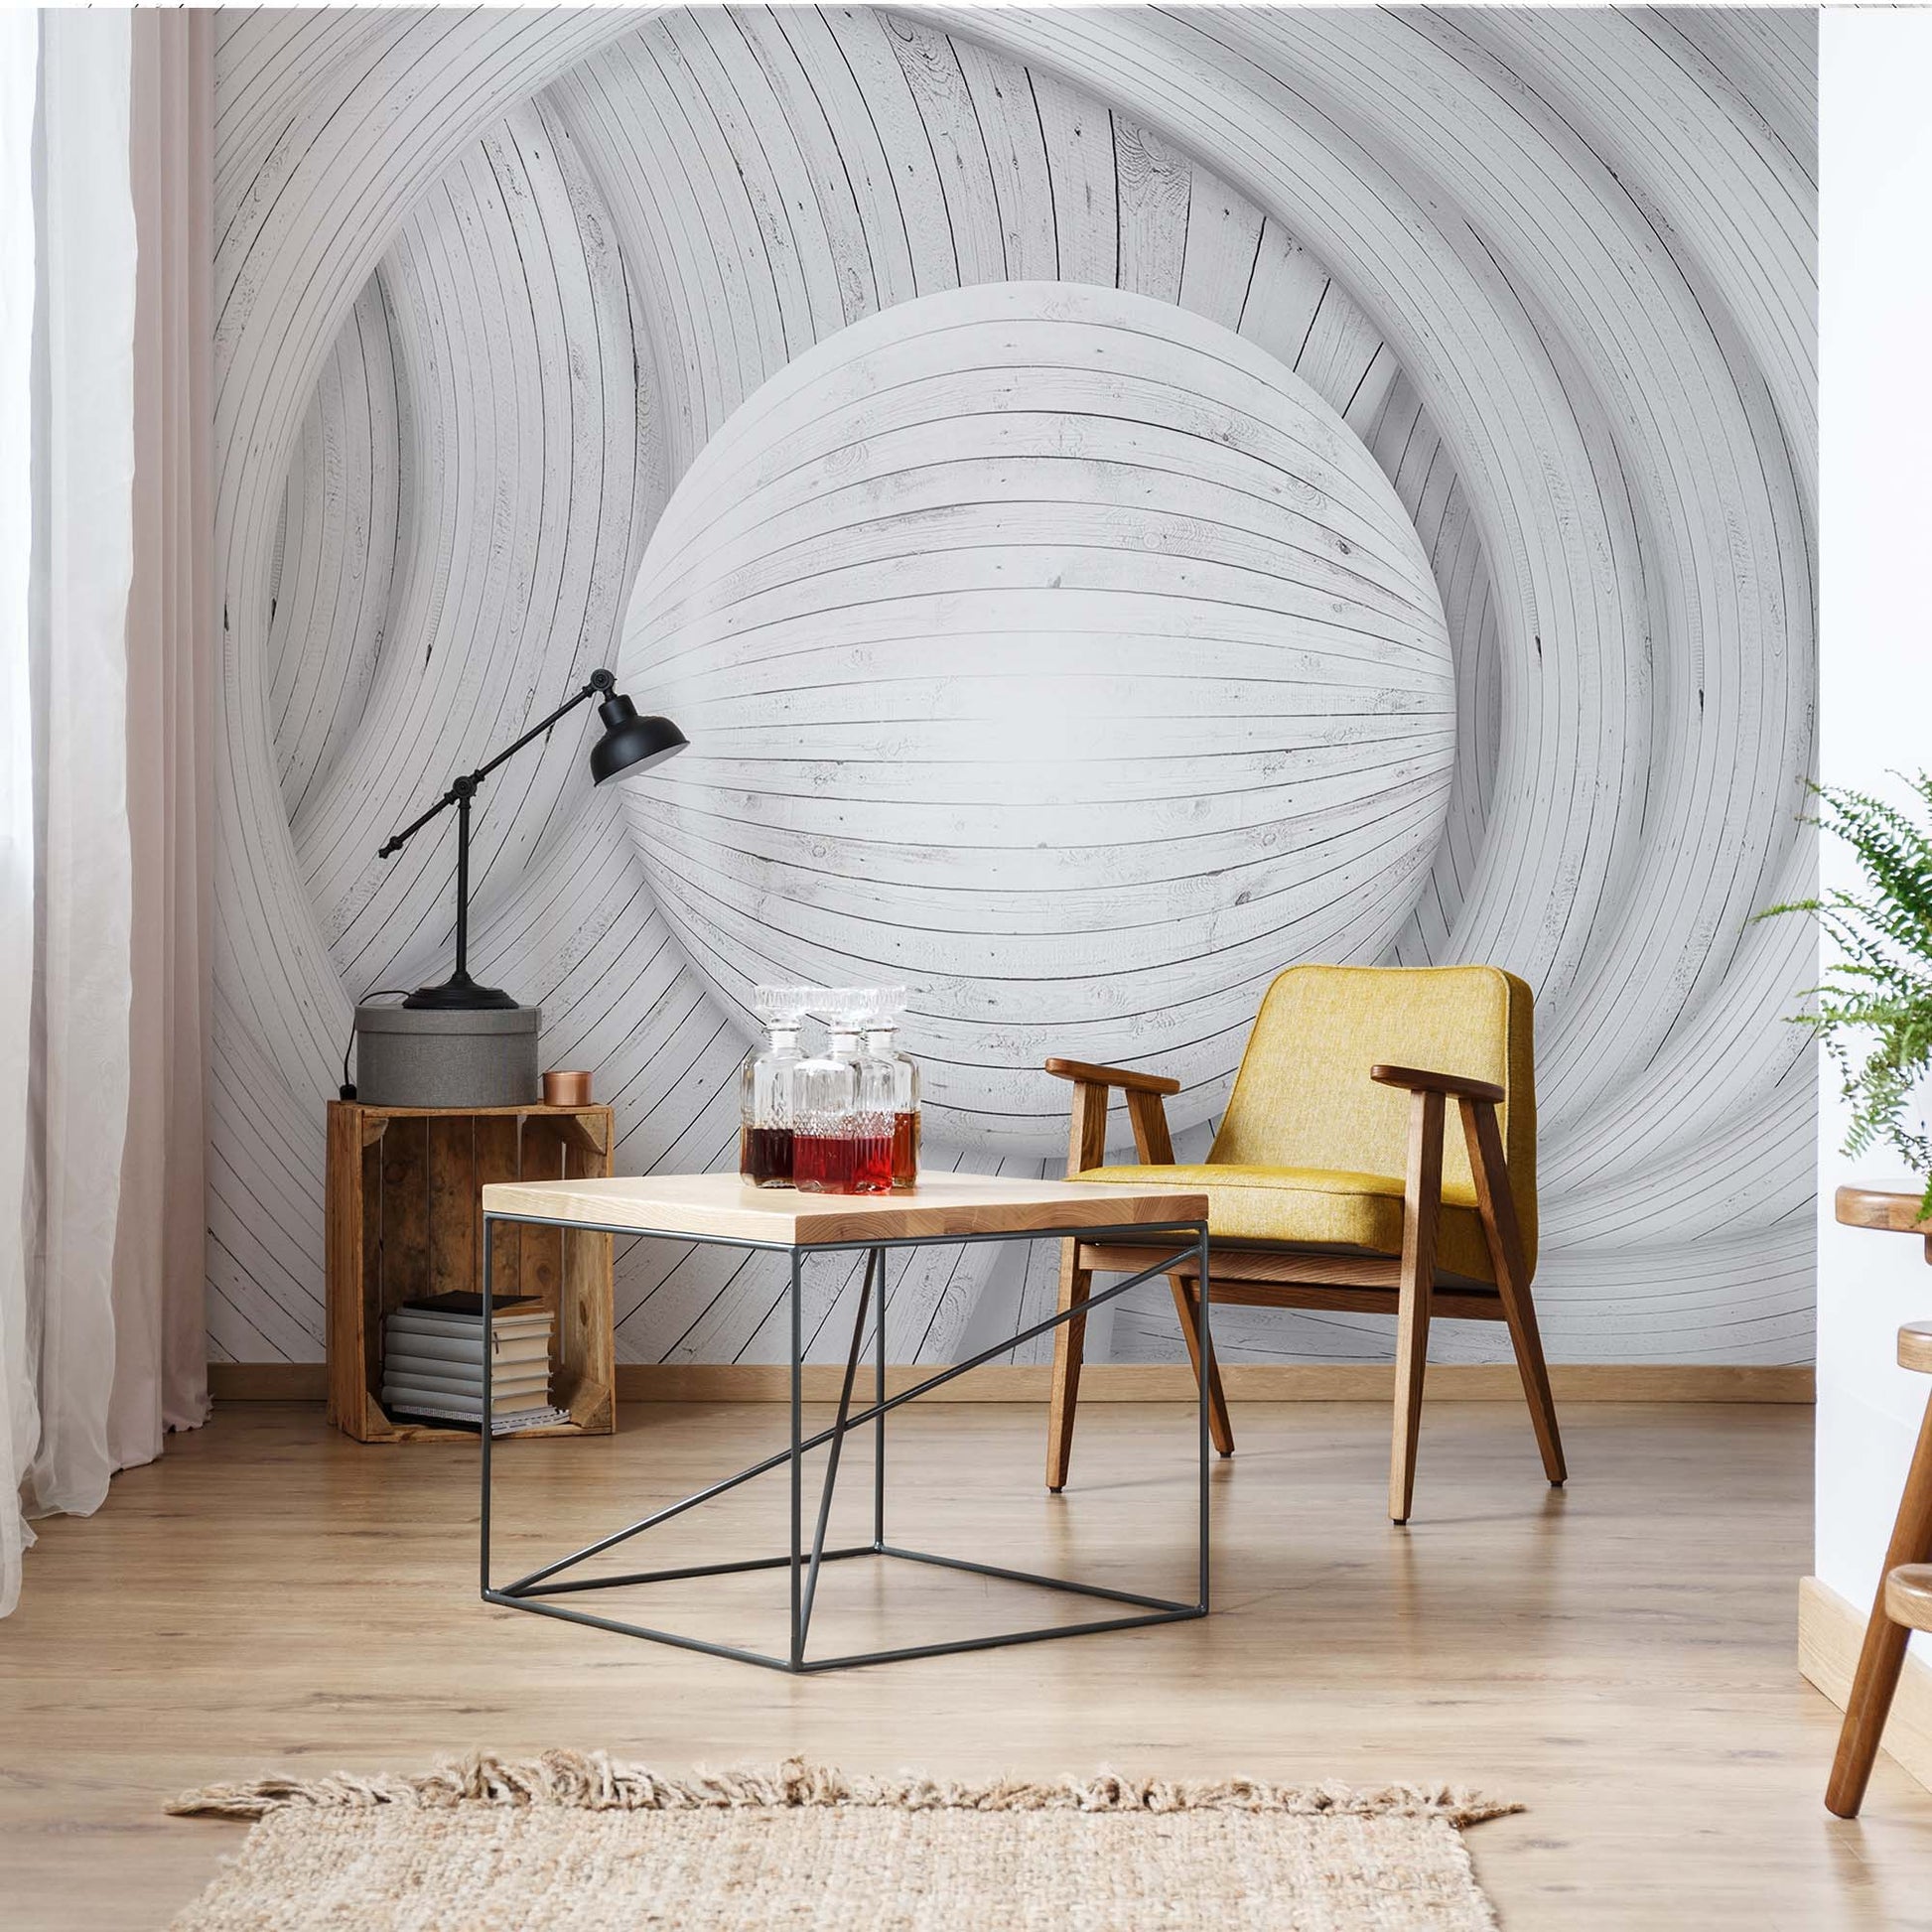 3D Design Photo Wallpaper Wall Mural - USTAD HOME